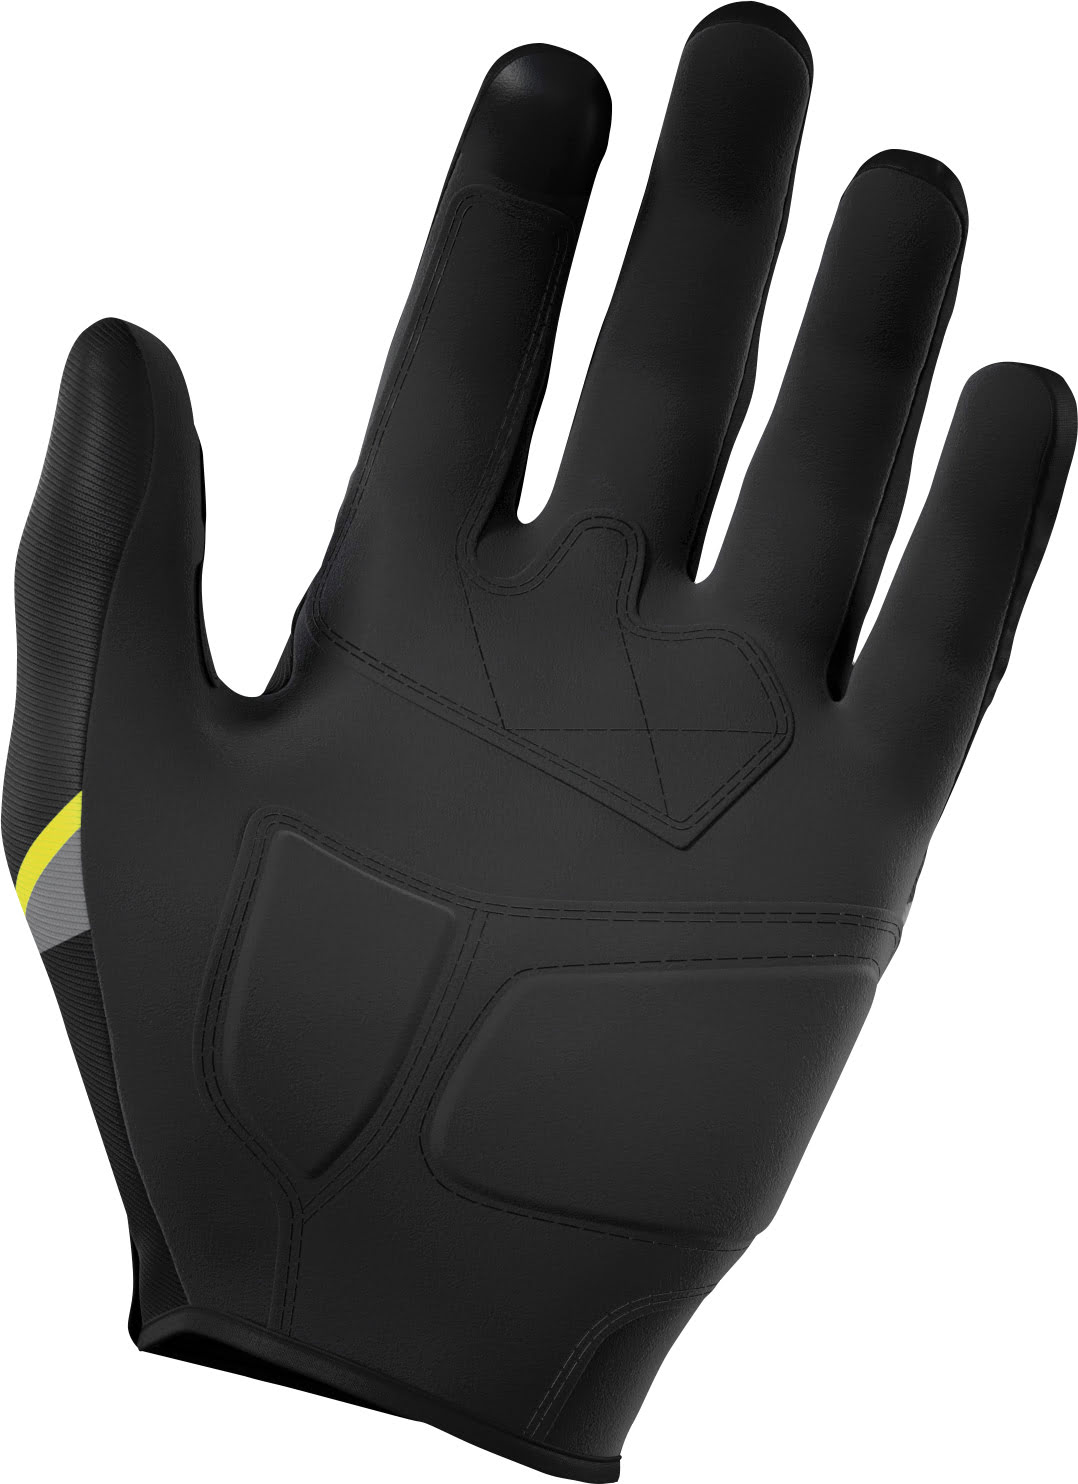 Gloves DRIFT CAMO Camo / Neon Yellow SHOT 